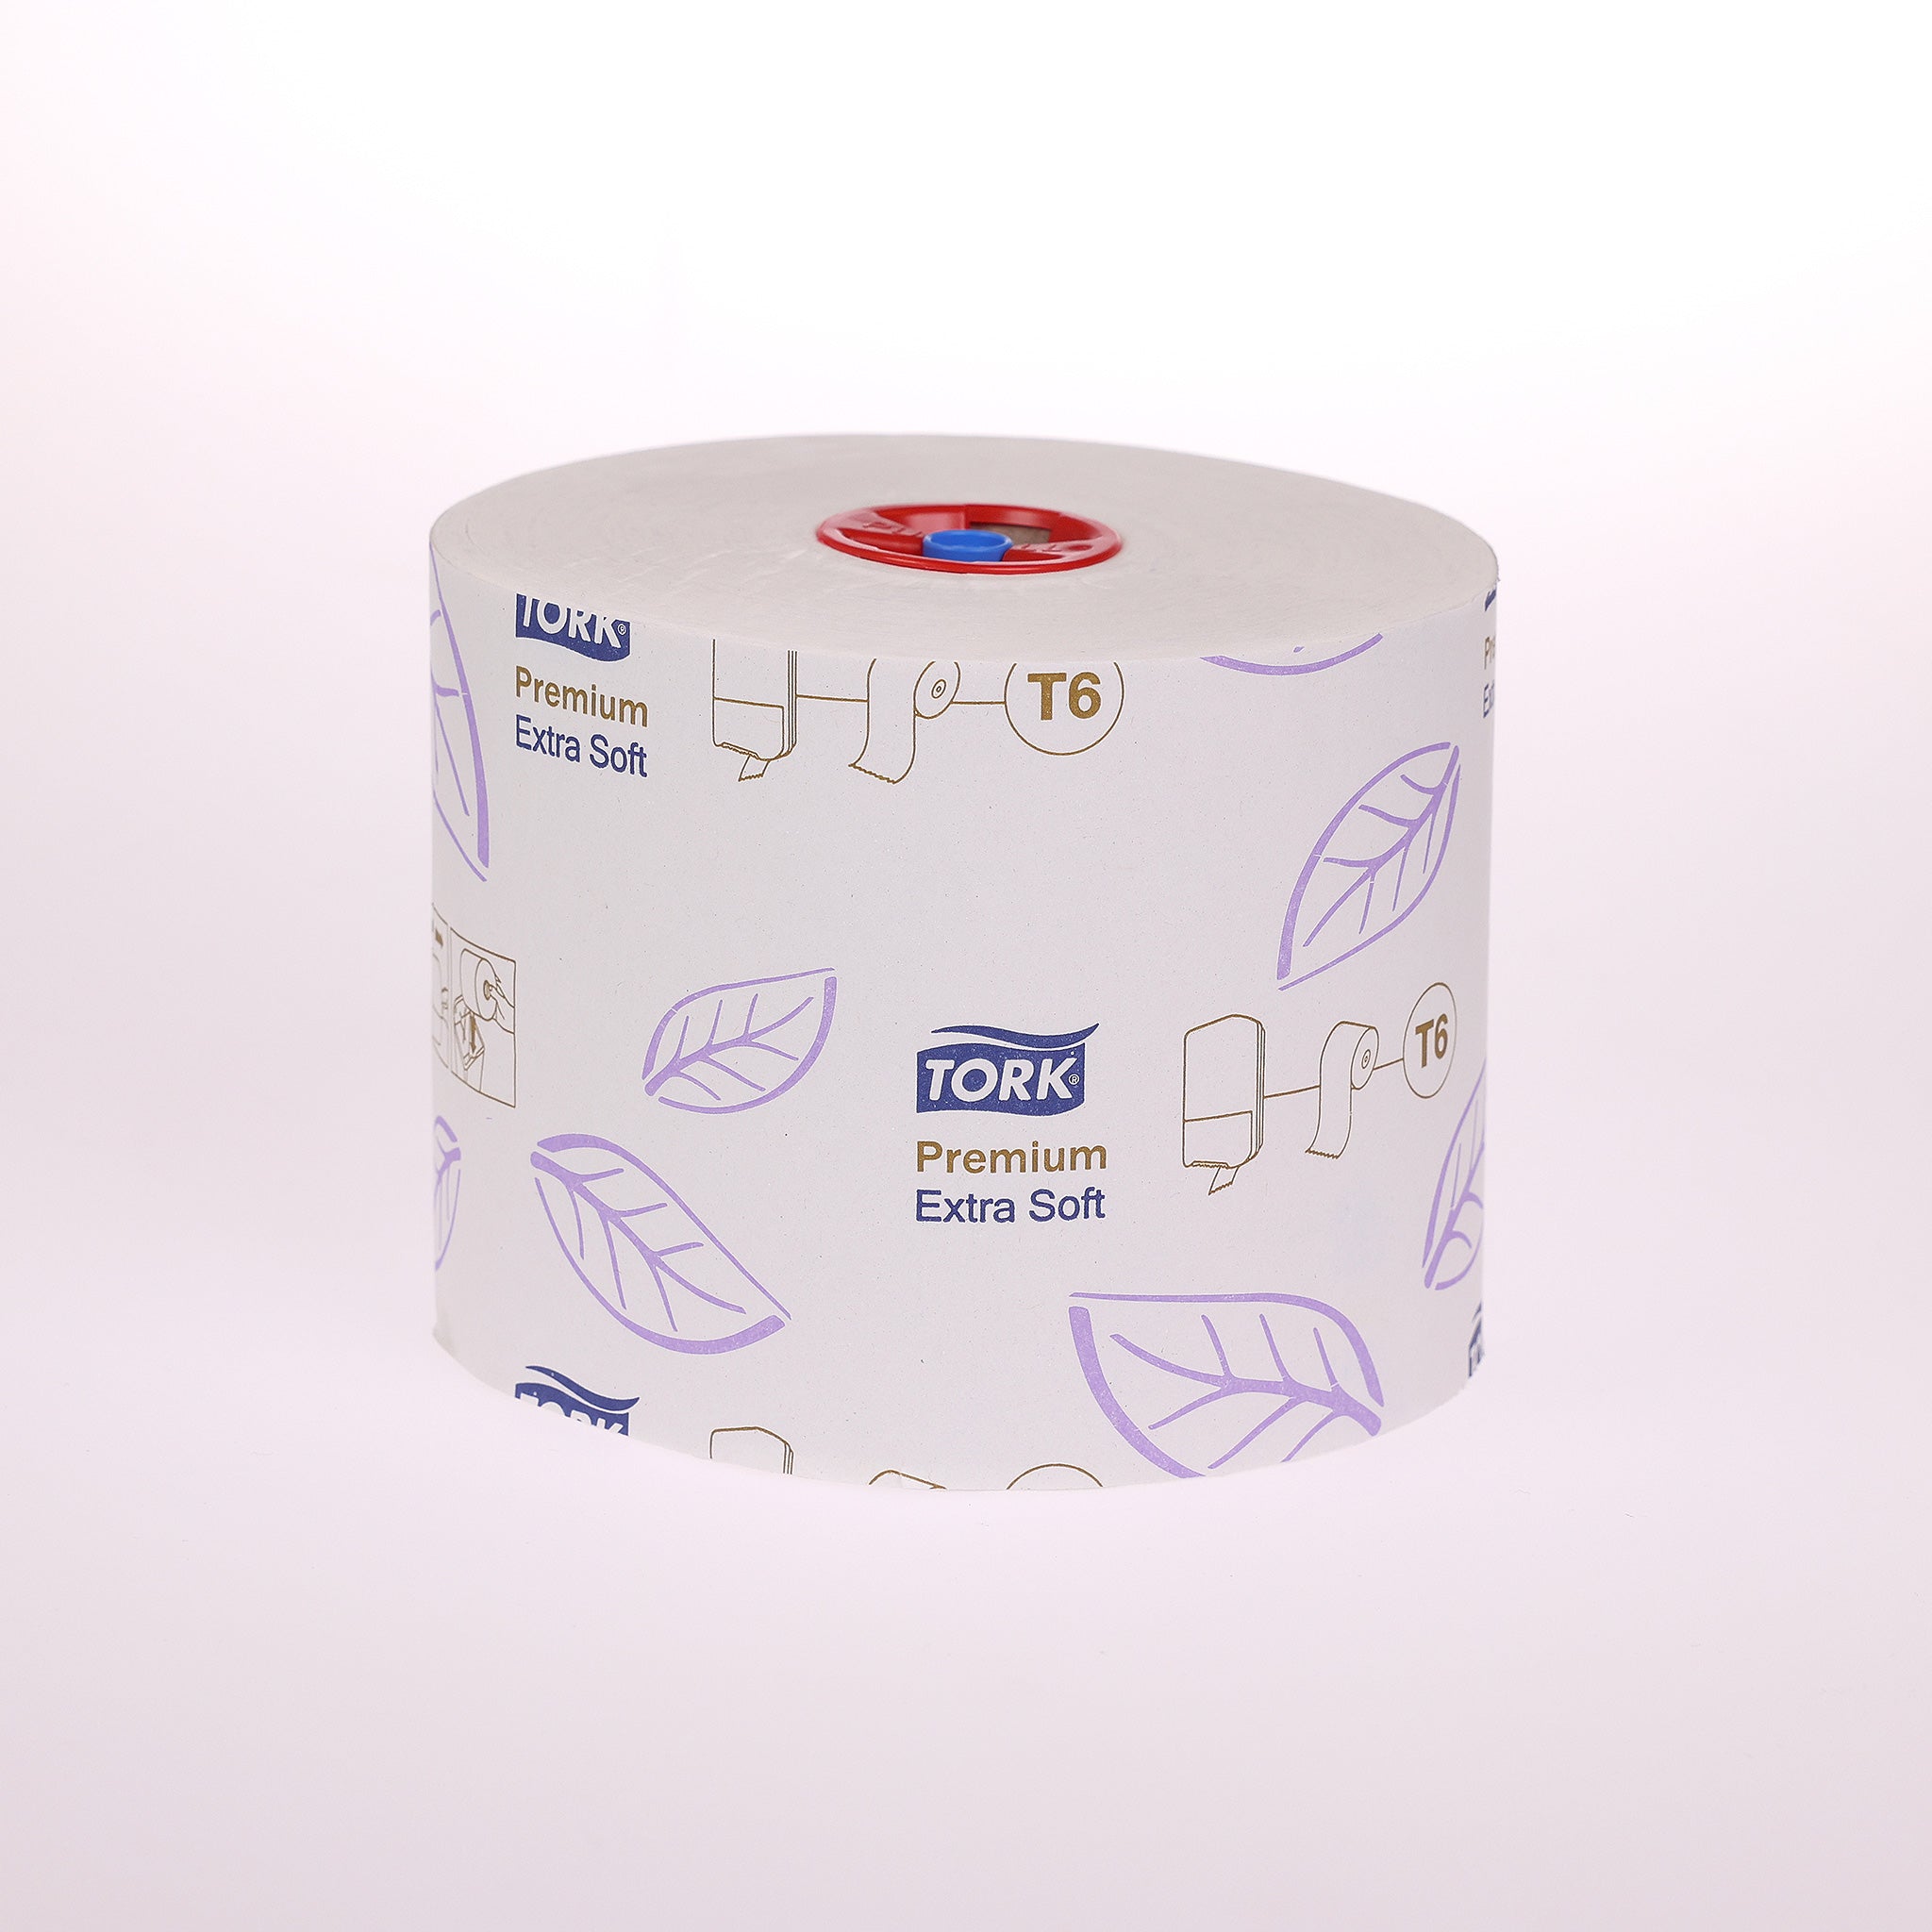 3-lags toiletpapir til Tork T6 dispensere. Toiletpapiret er i en ekstra blød kvalitet, der sikrer en behagelig brugsoplevelse.